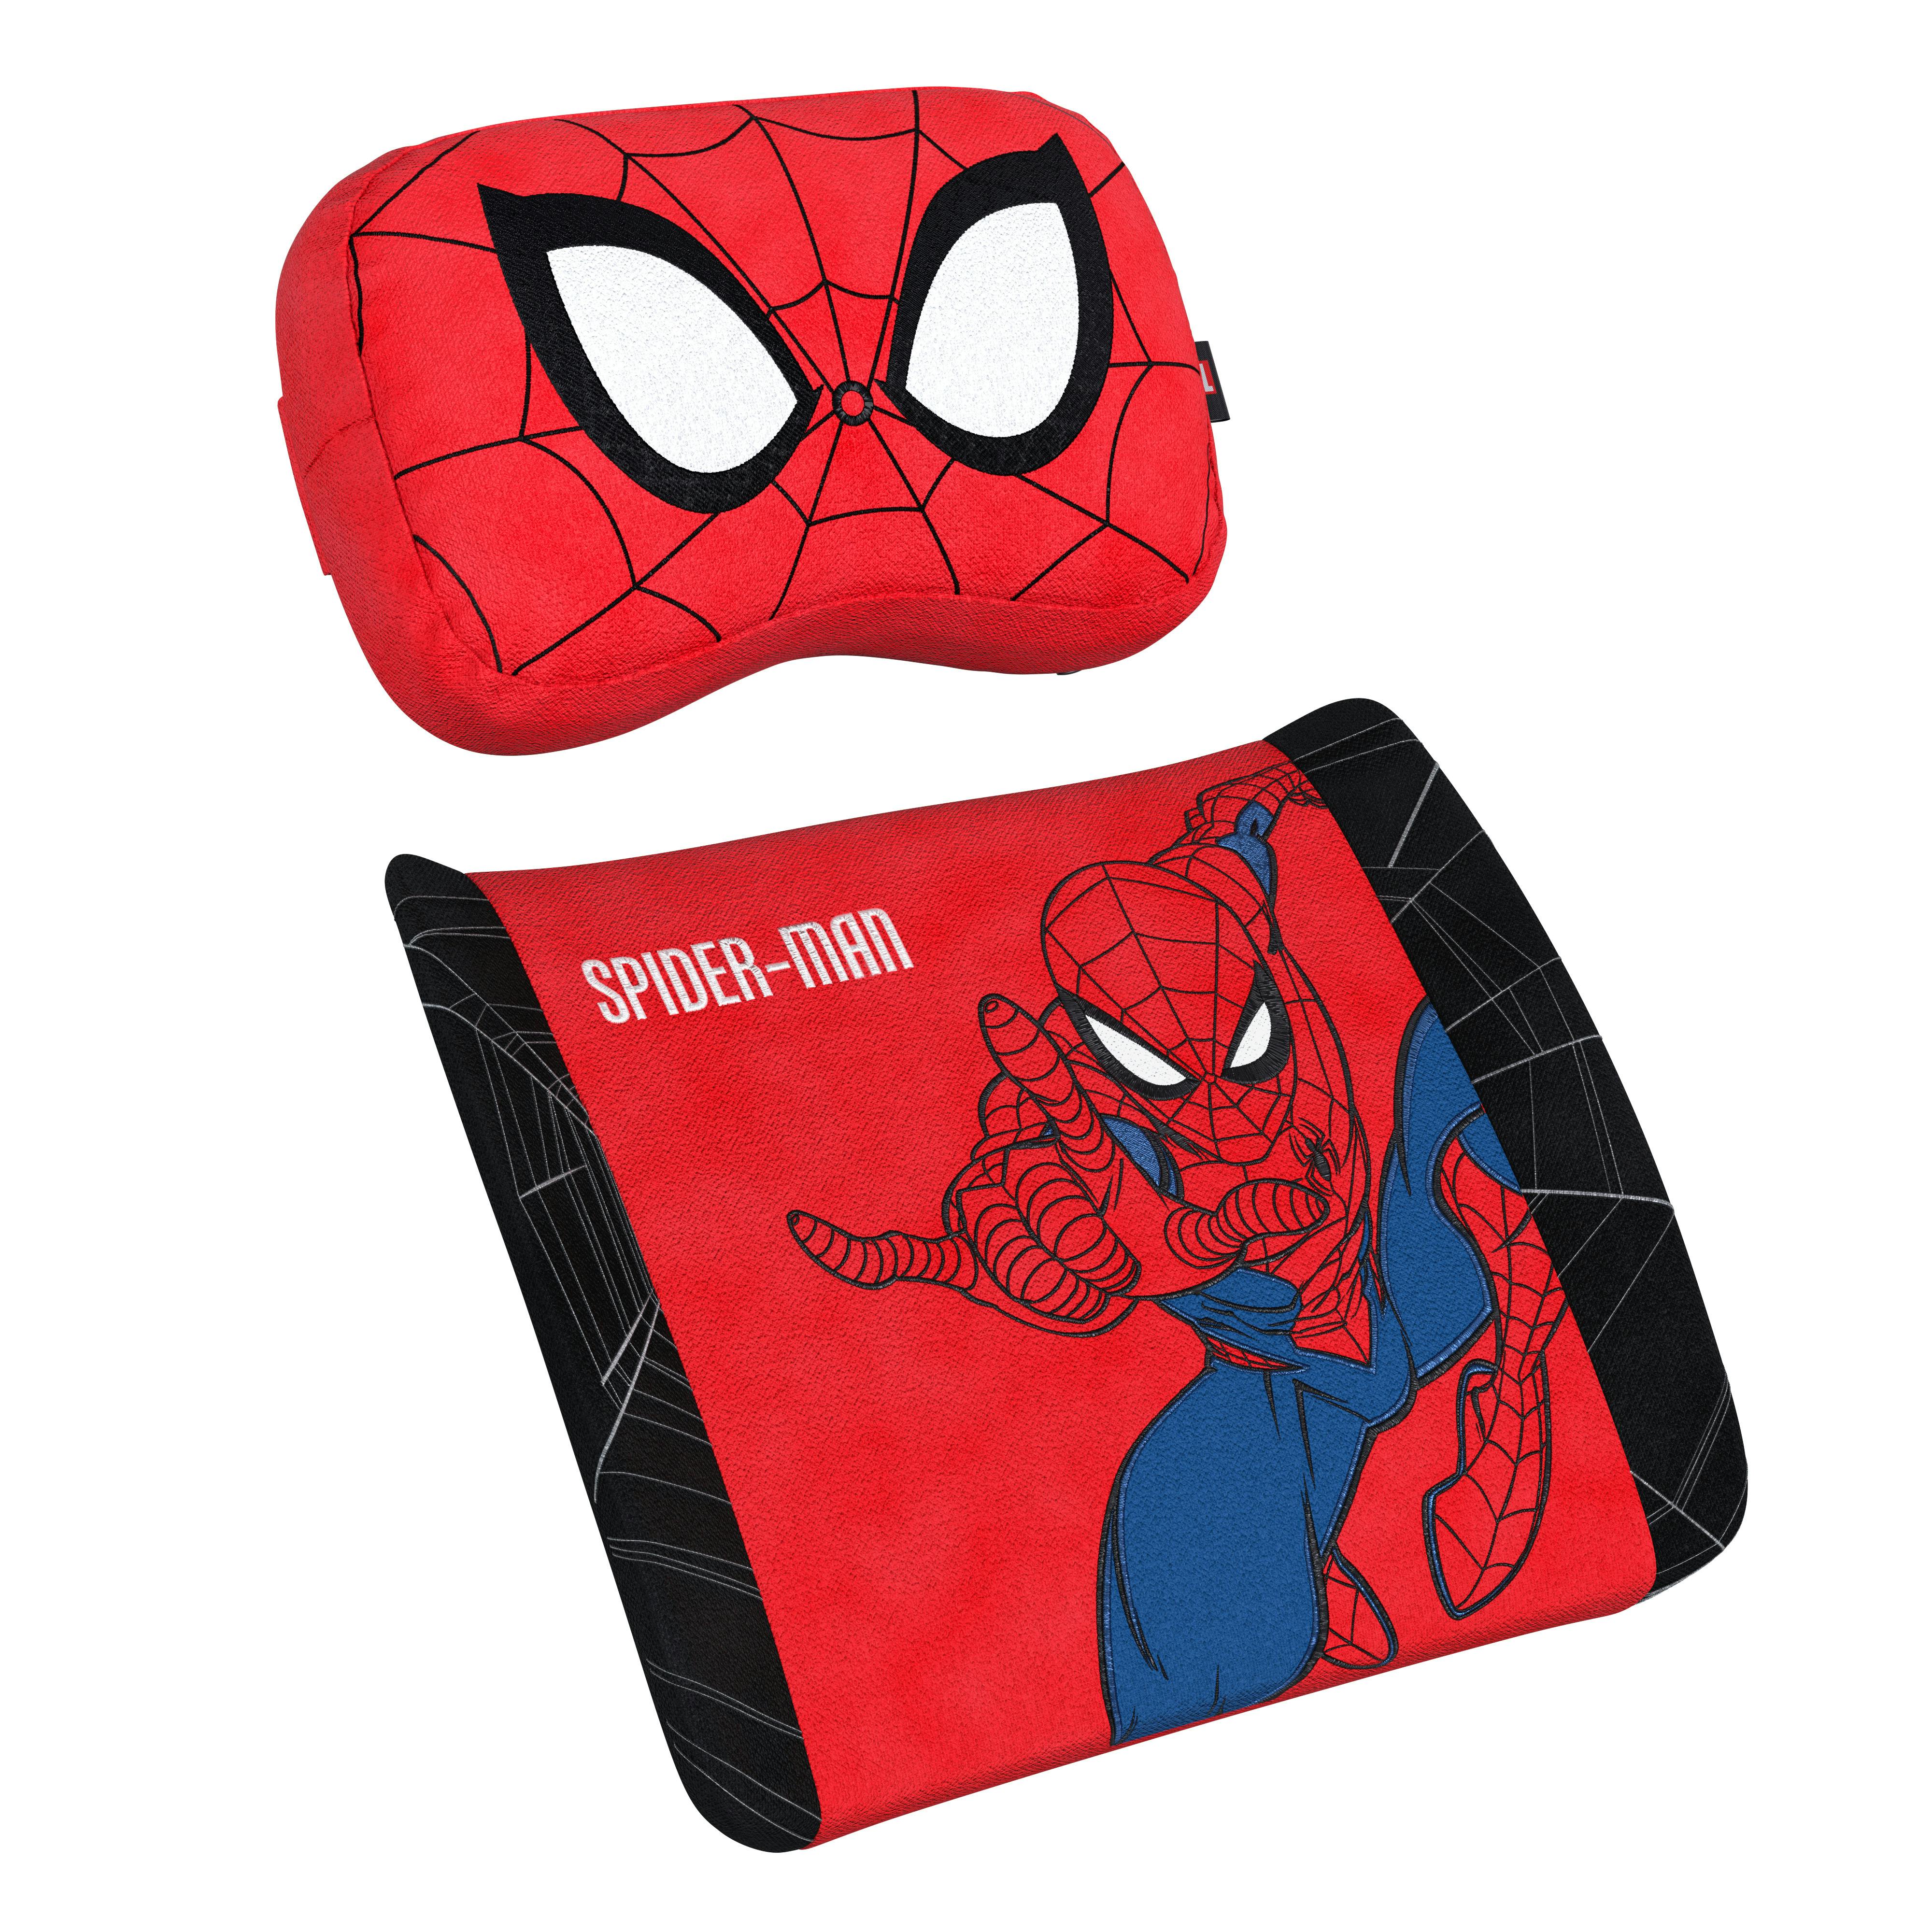  - Memory Foam Pillow Set - Spider-Man Edition